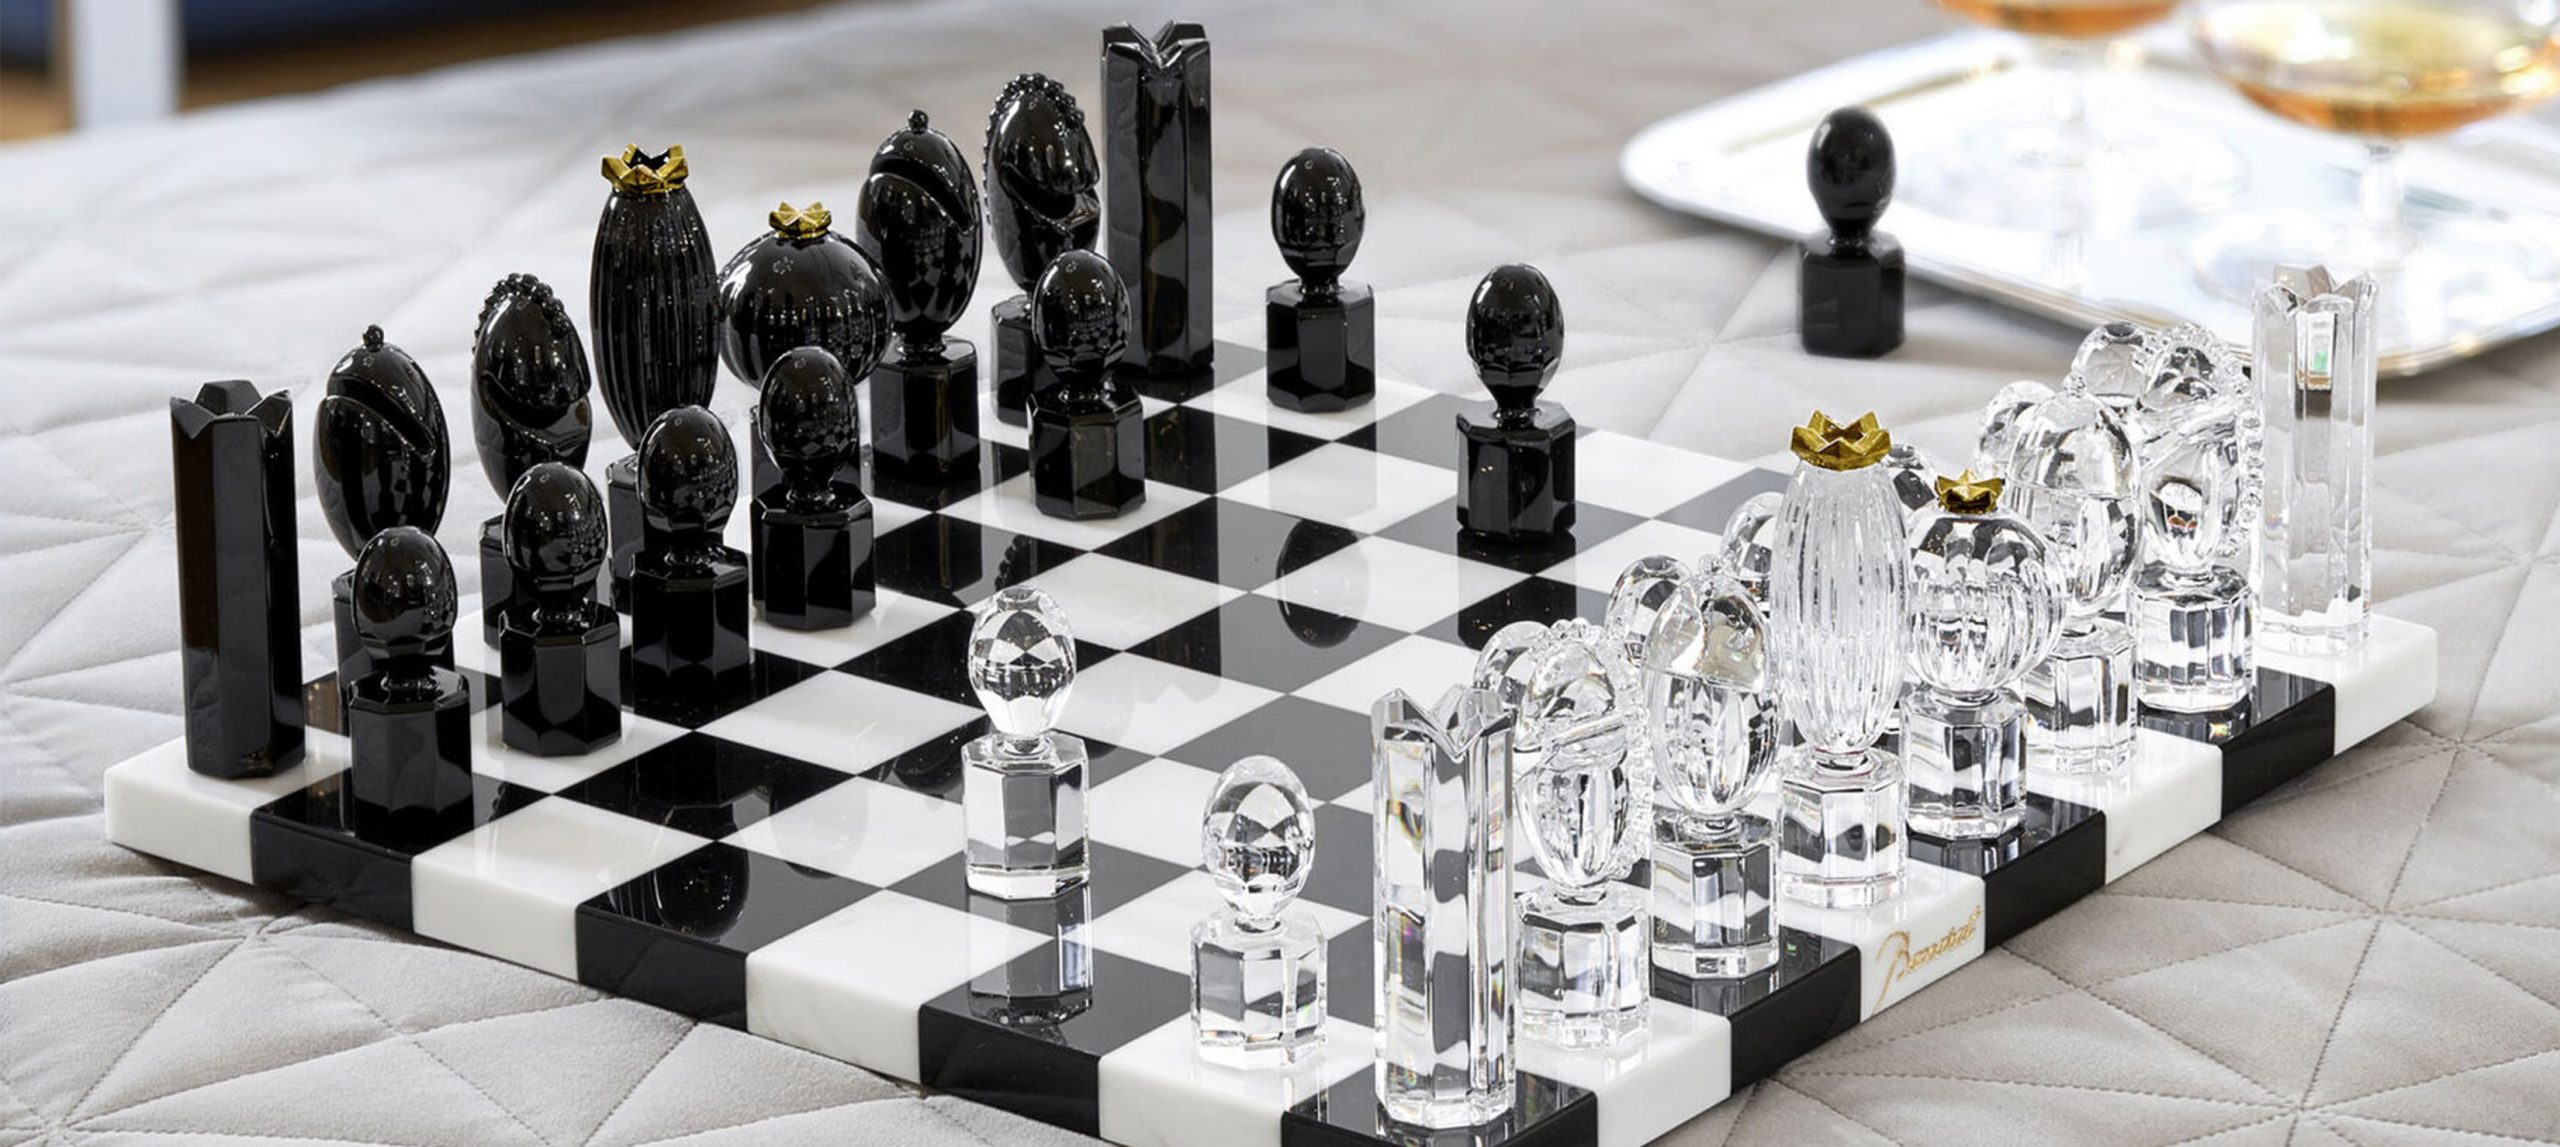 designer chess sets